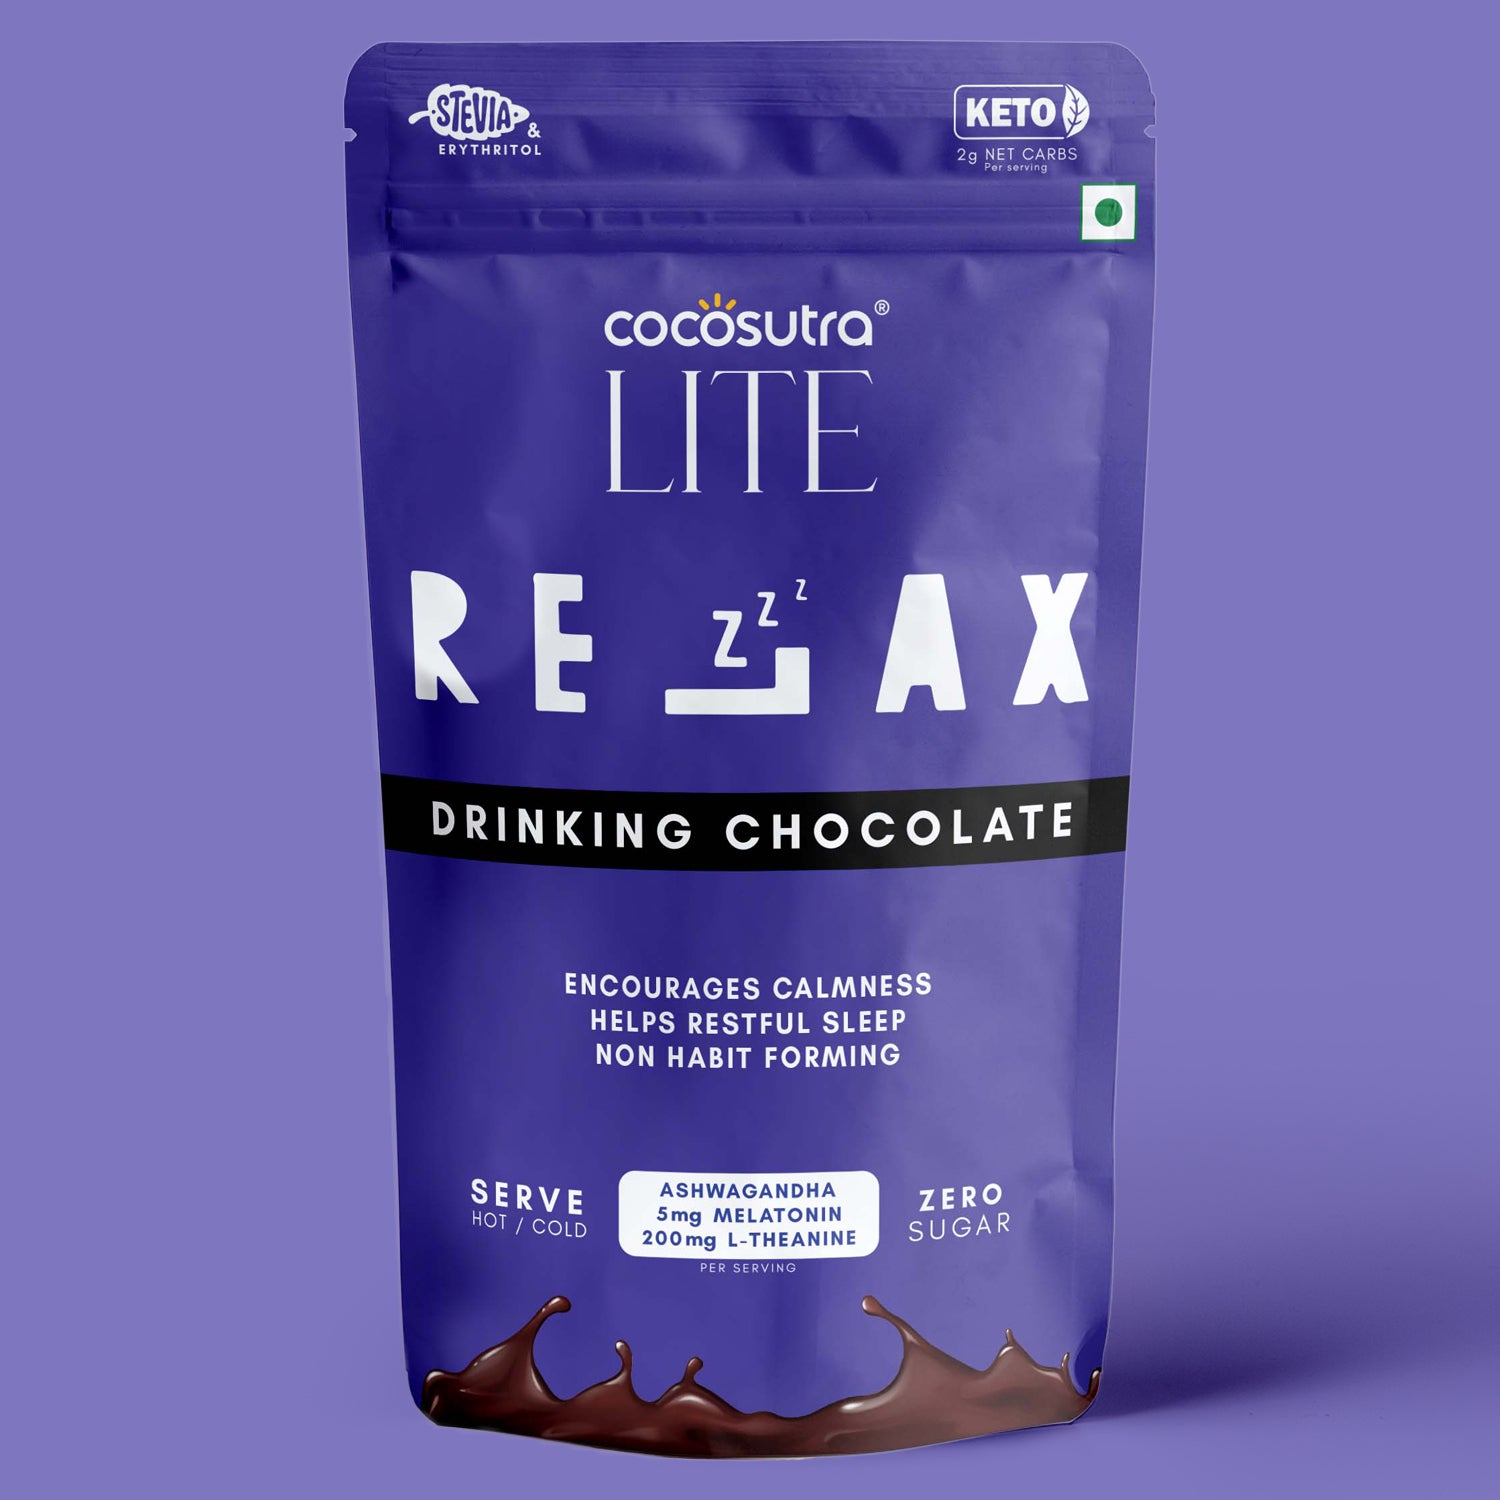 RELAX - Melatonin Based Sugar Free Drinking Chocolate Mix